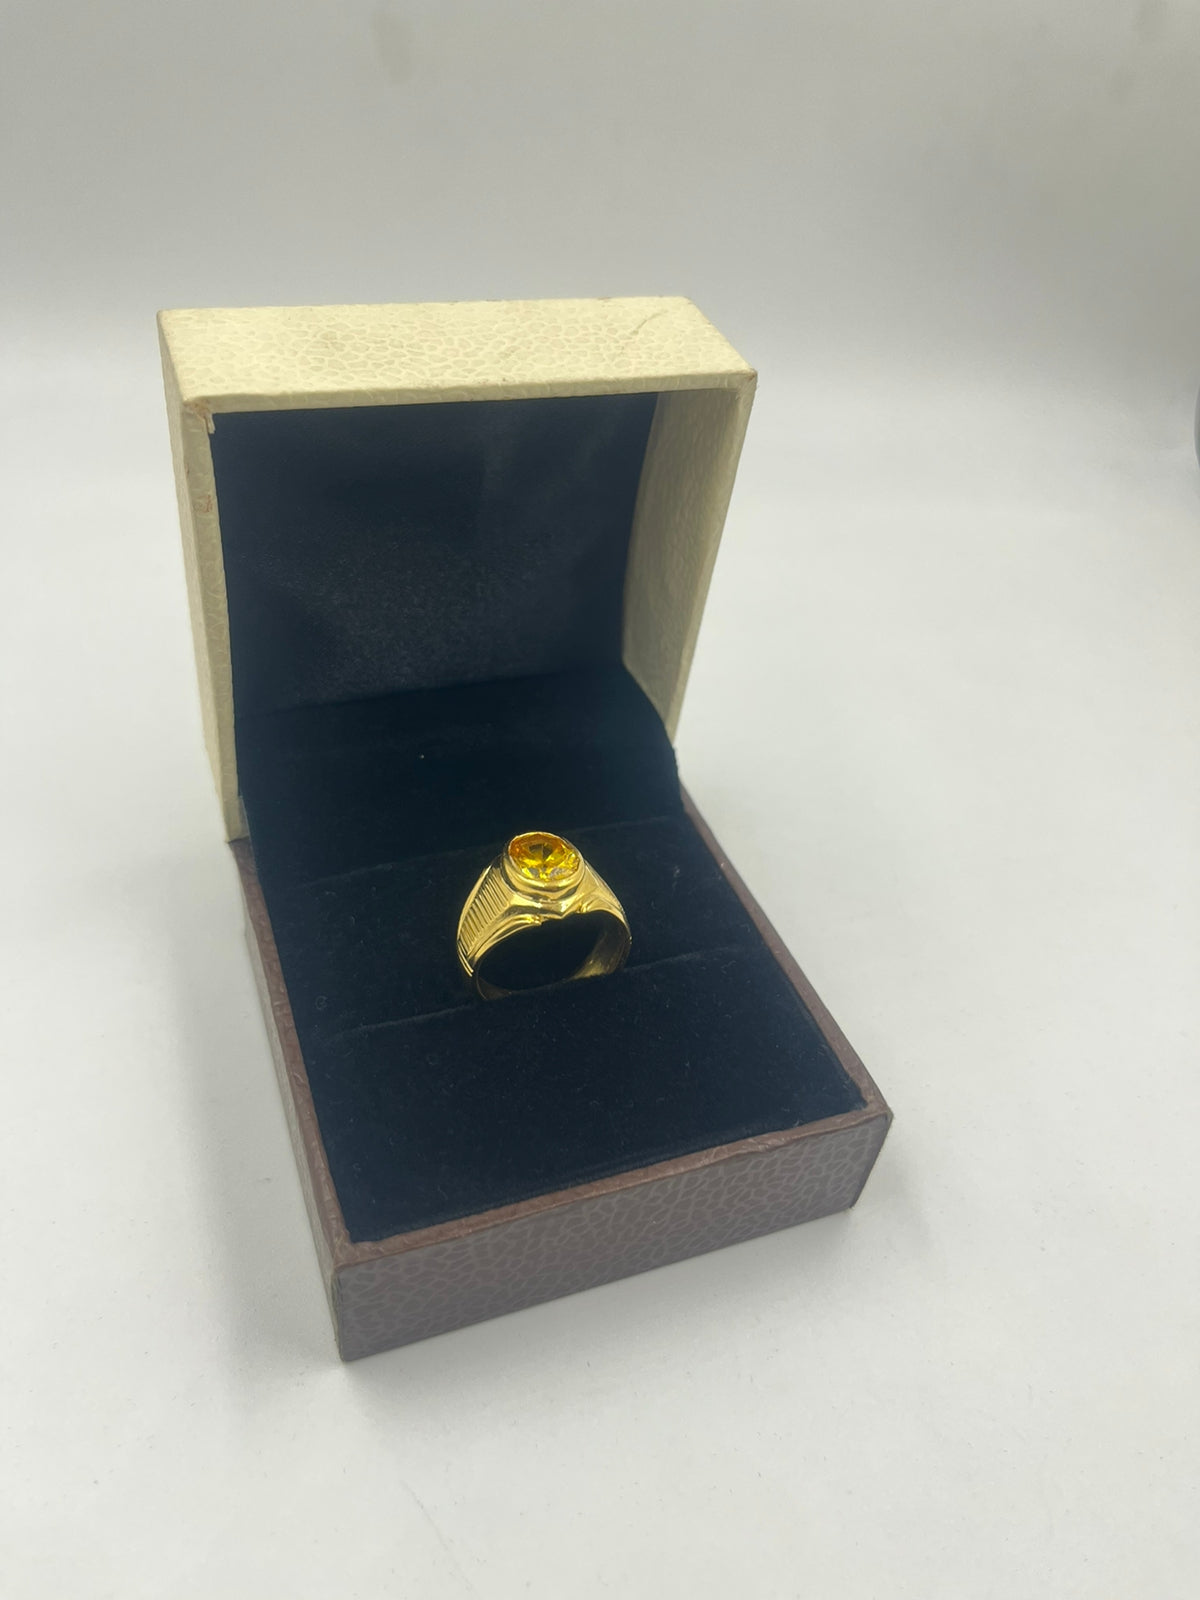 Buy Five Metal One Gram Gold Single Blue Stone Ring for Men